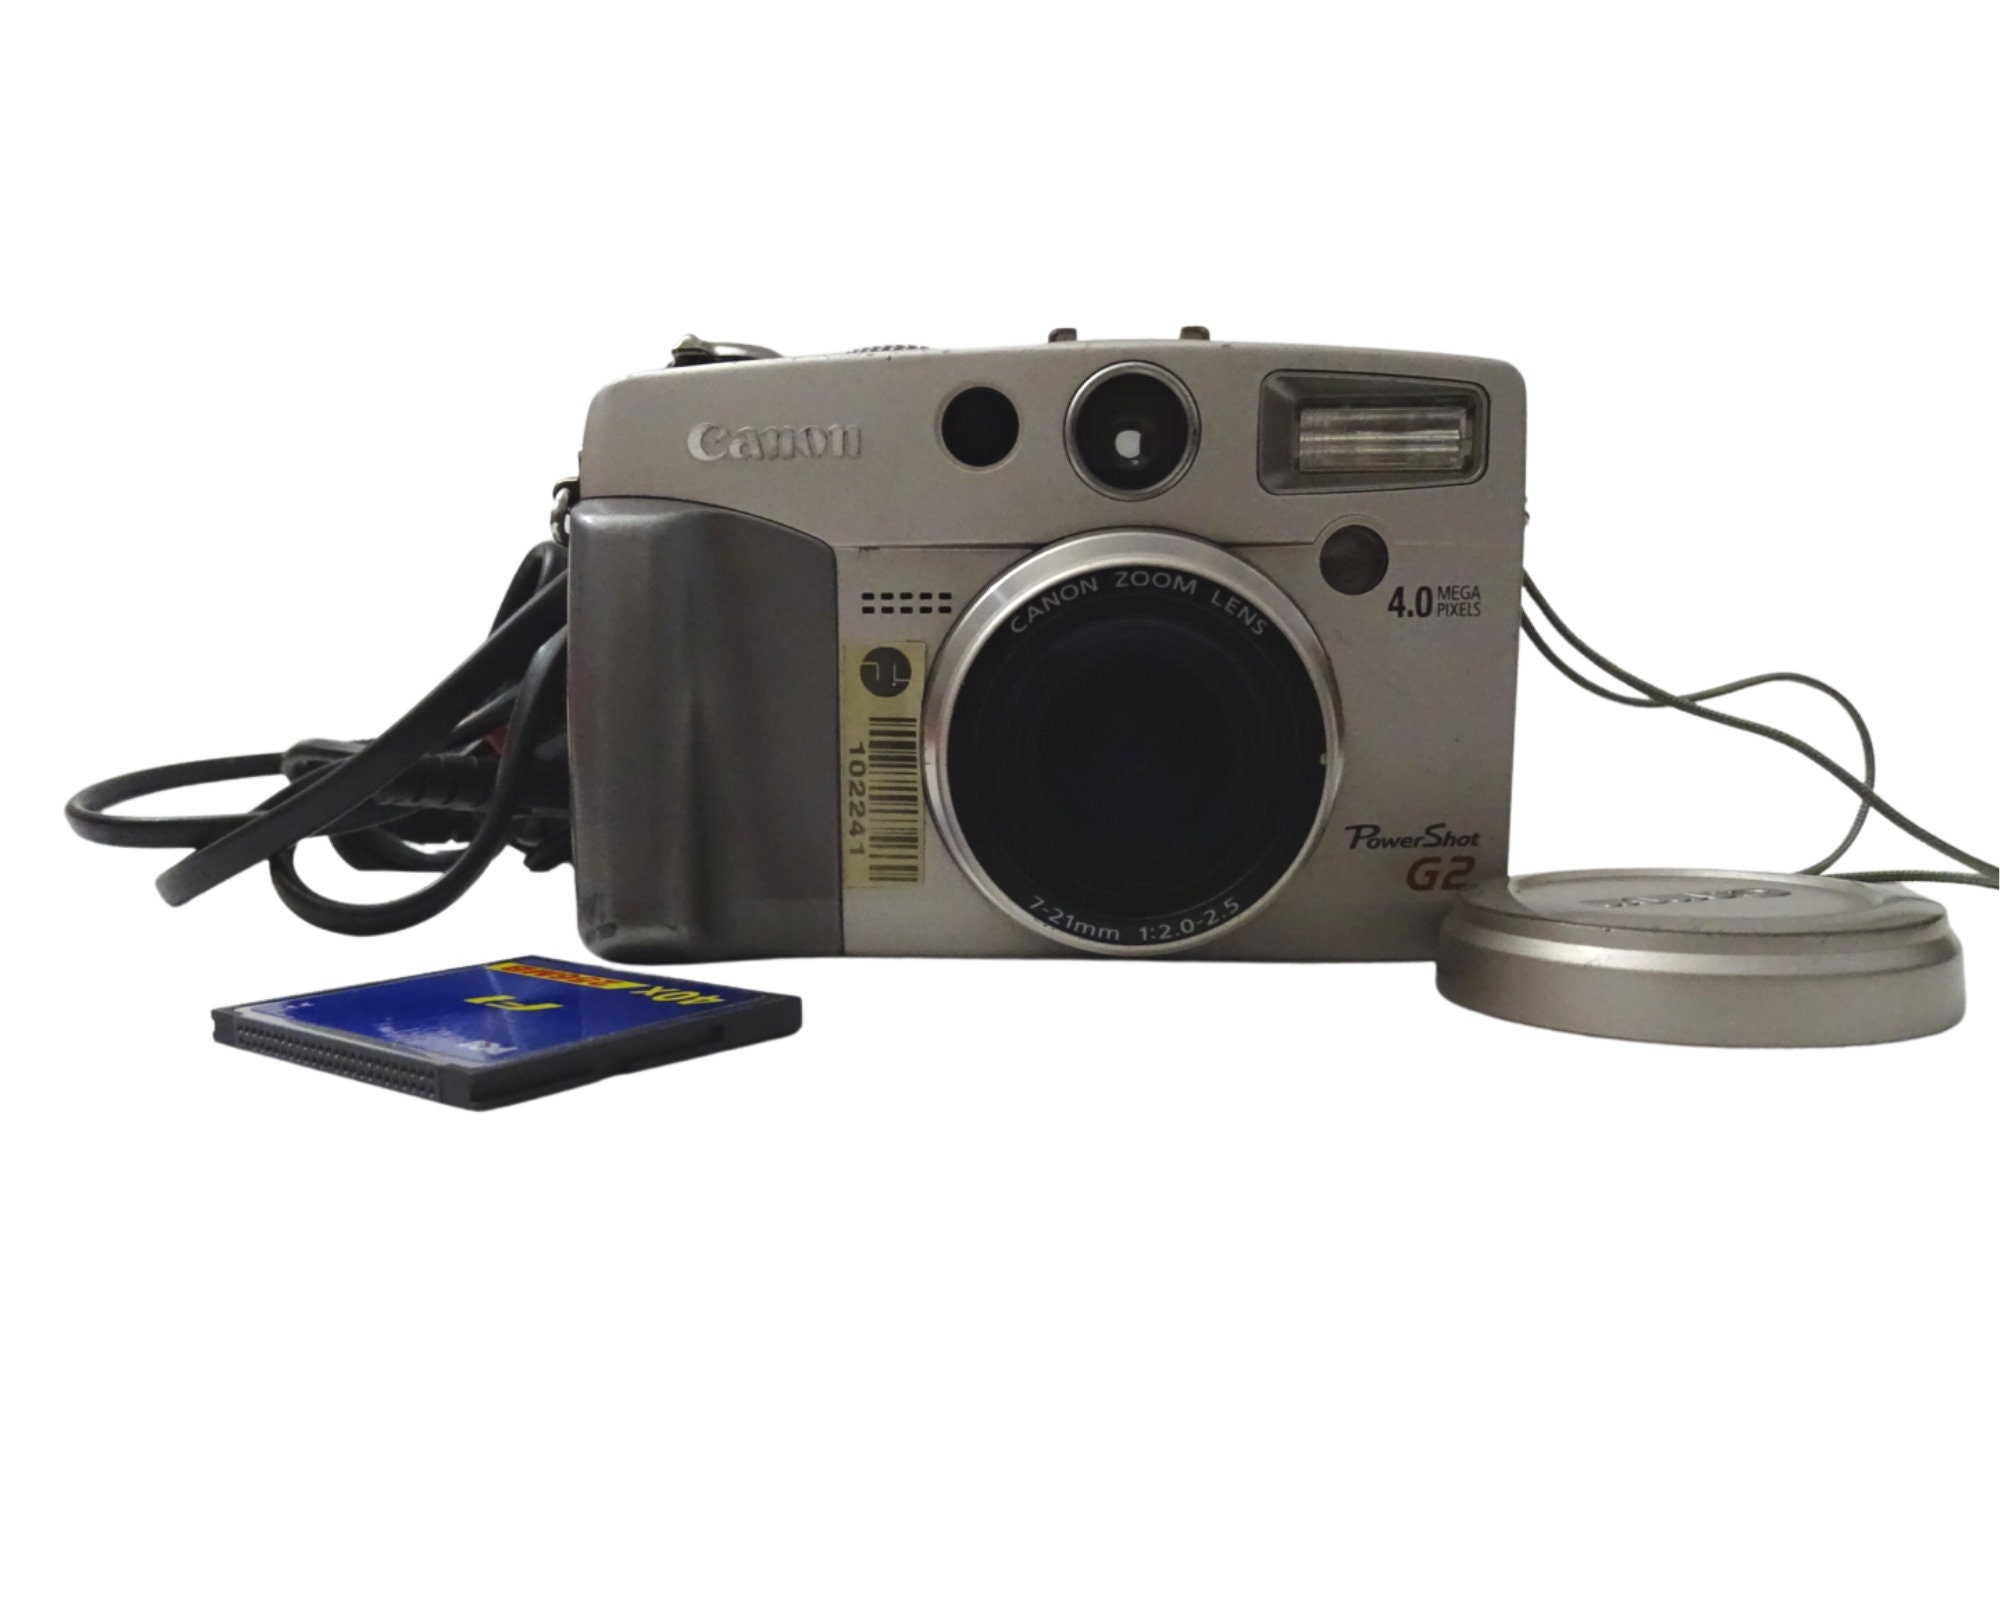 De Kamer fantoom Menda City Canon Powershot G2. Vintage Digital Camera. Compact 2000 - Etsy